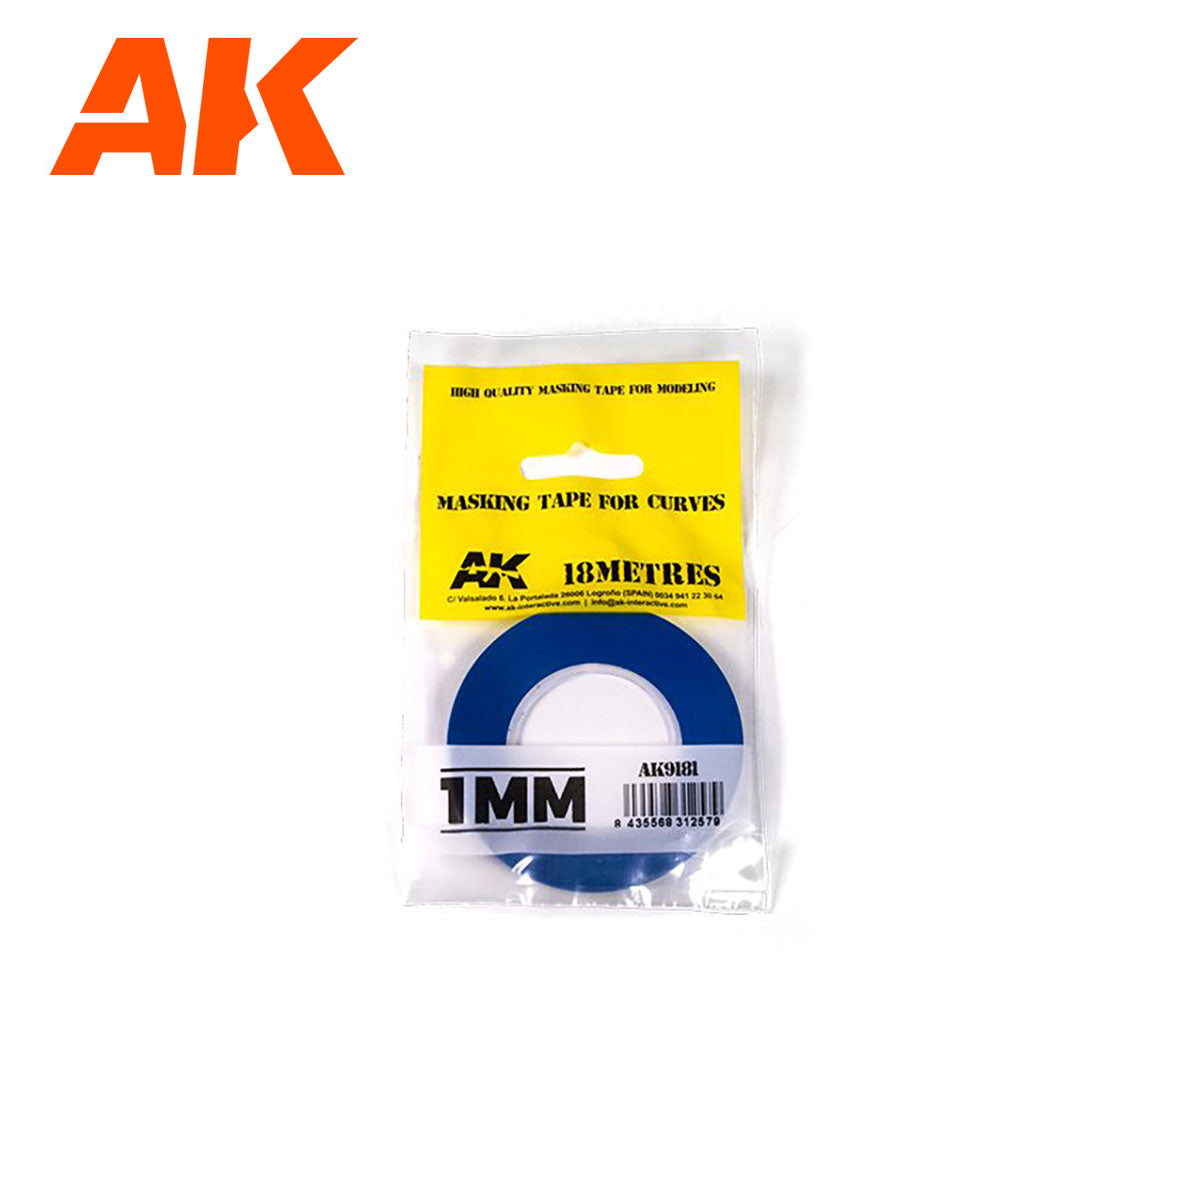 AK: Blue Masking Tape for Curves